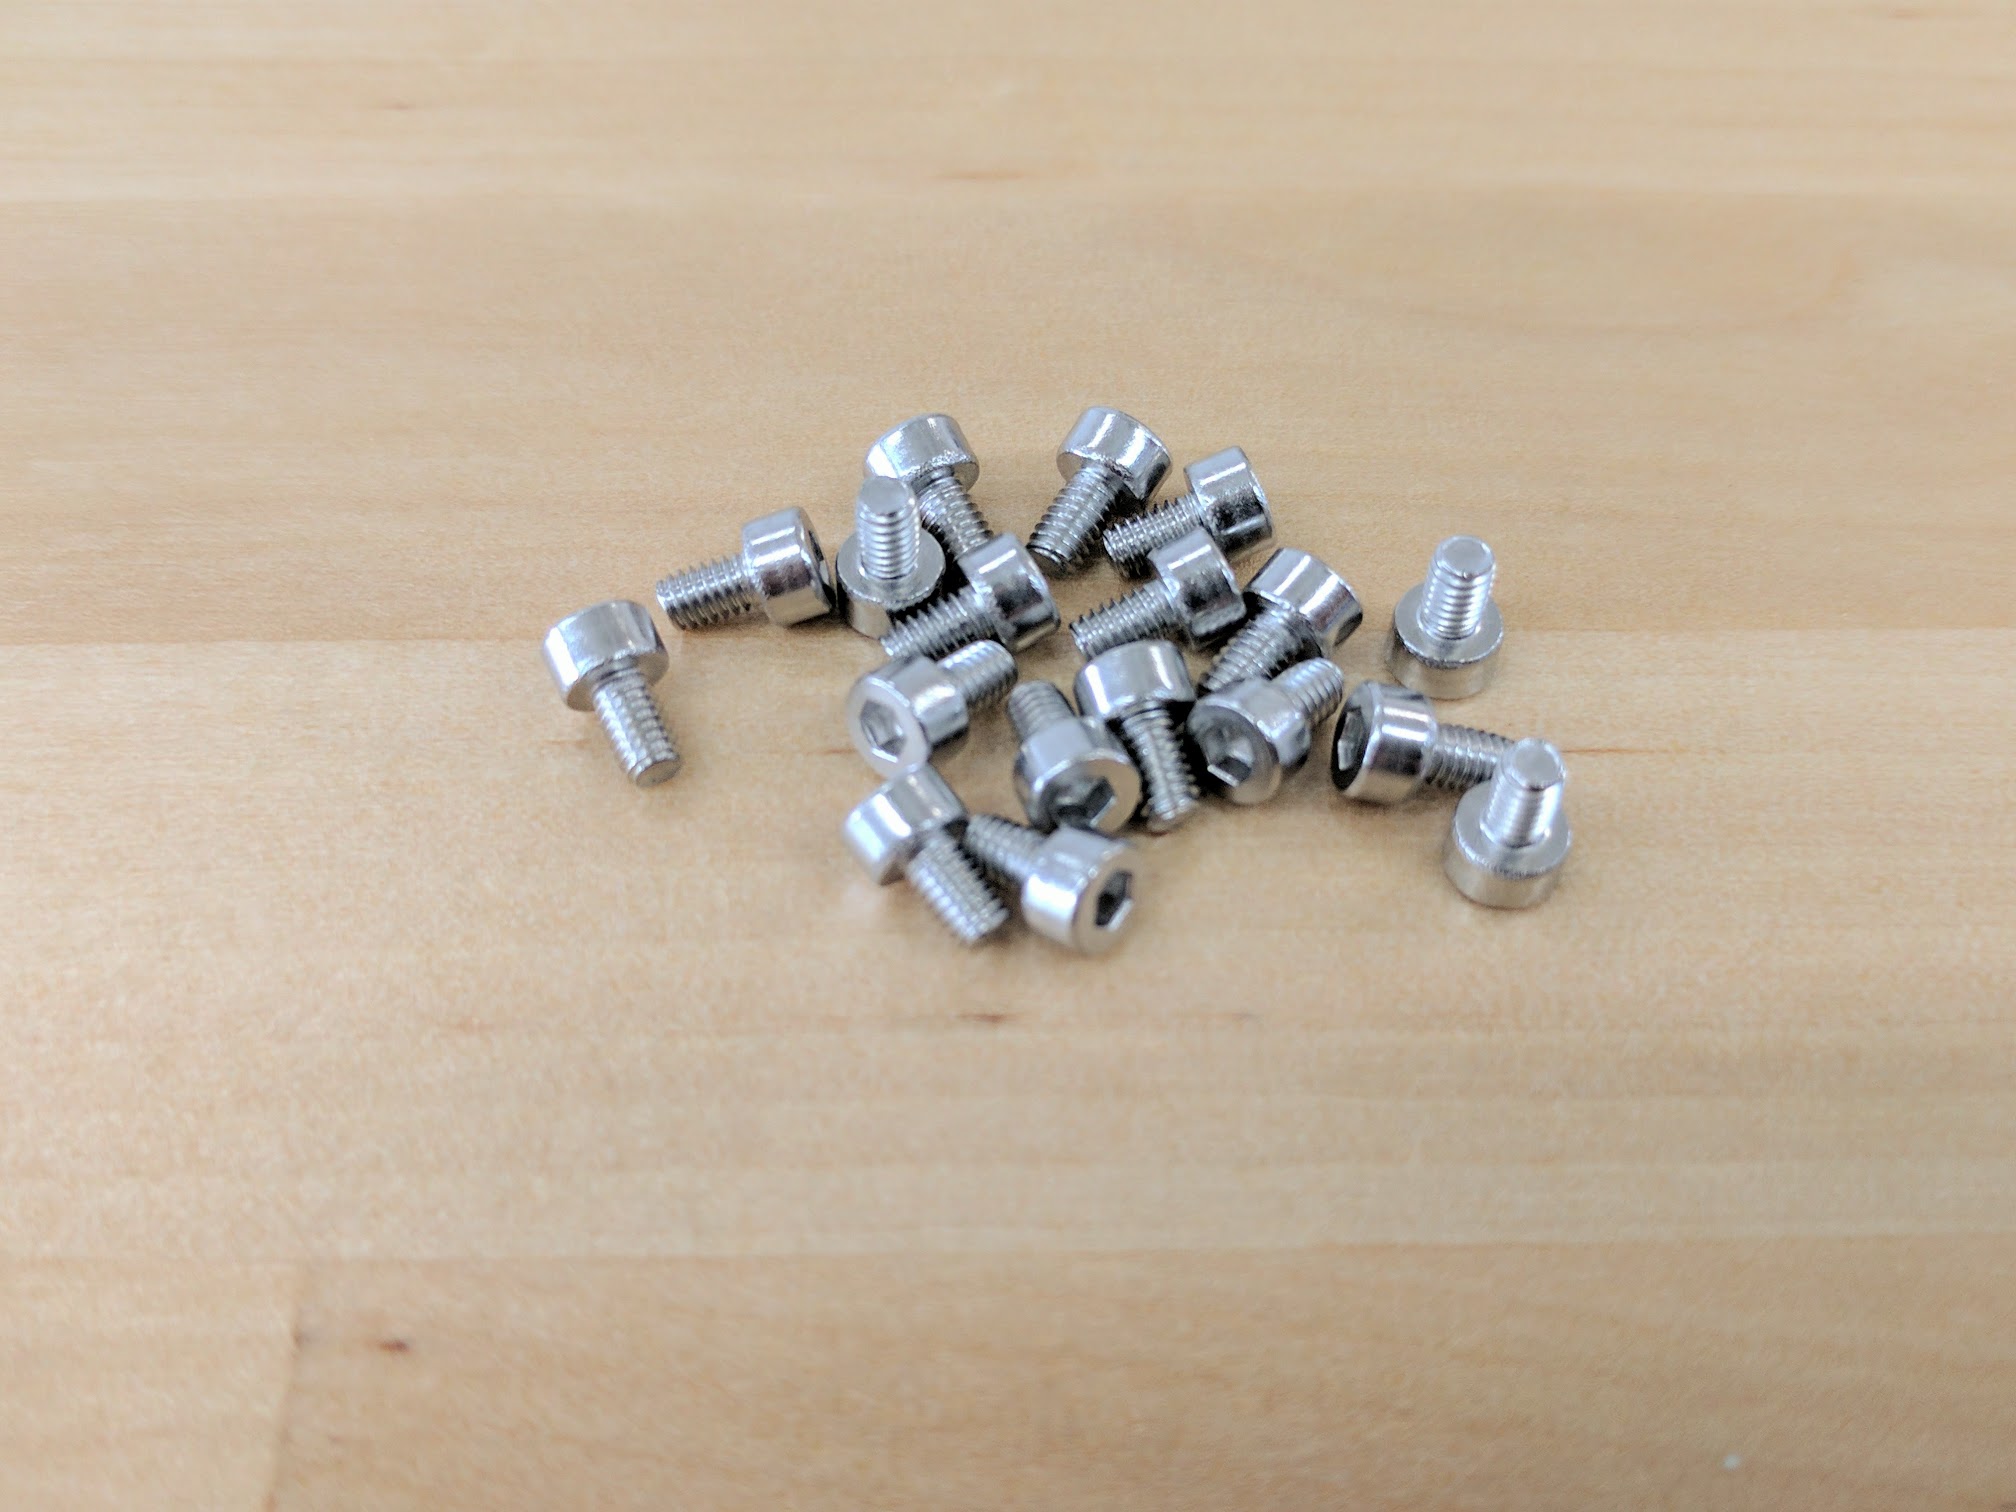 M2.5x4 screws